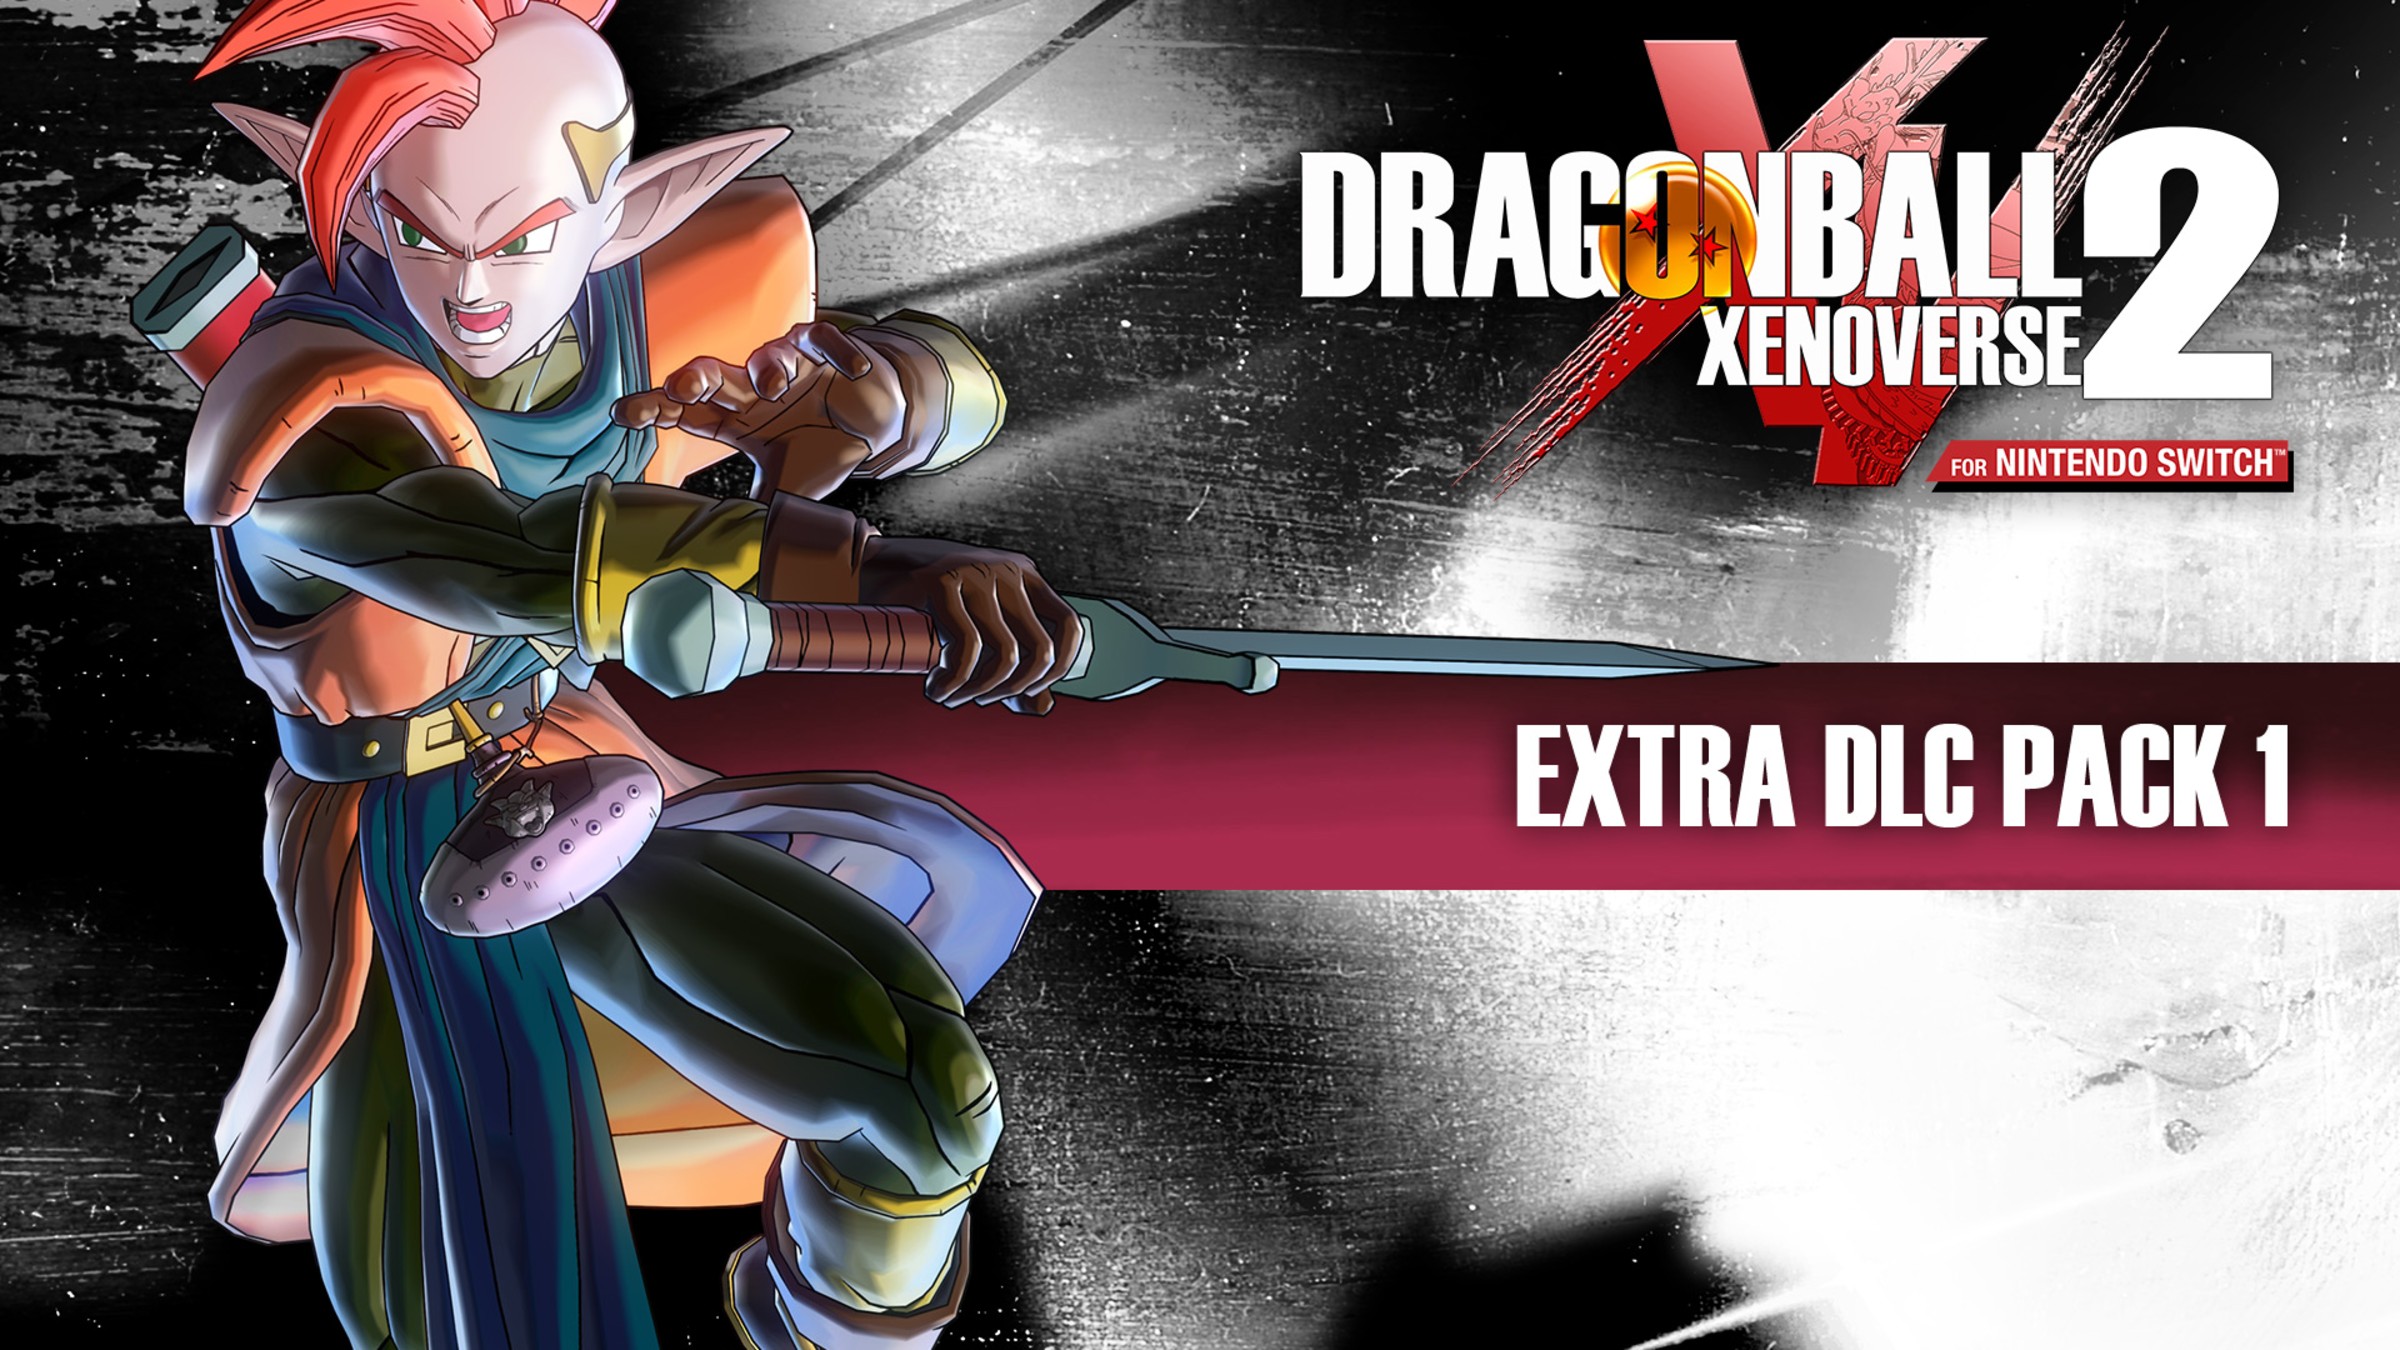 DRAGON BALL XENOVERSE 2 - Extra DLC Pack 4